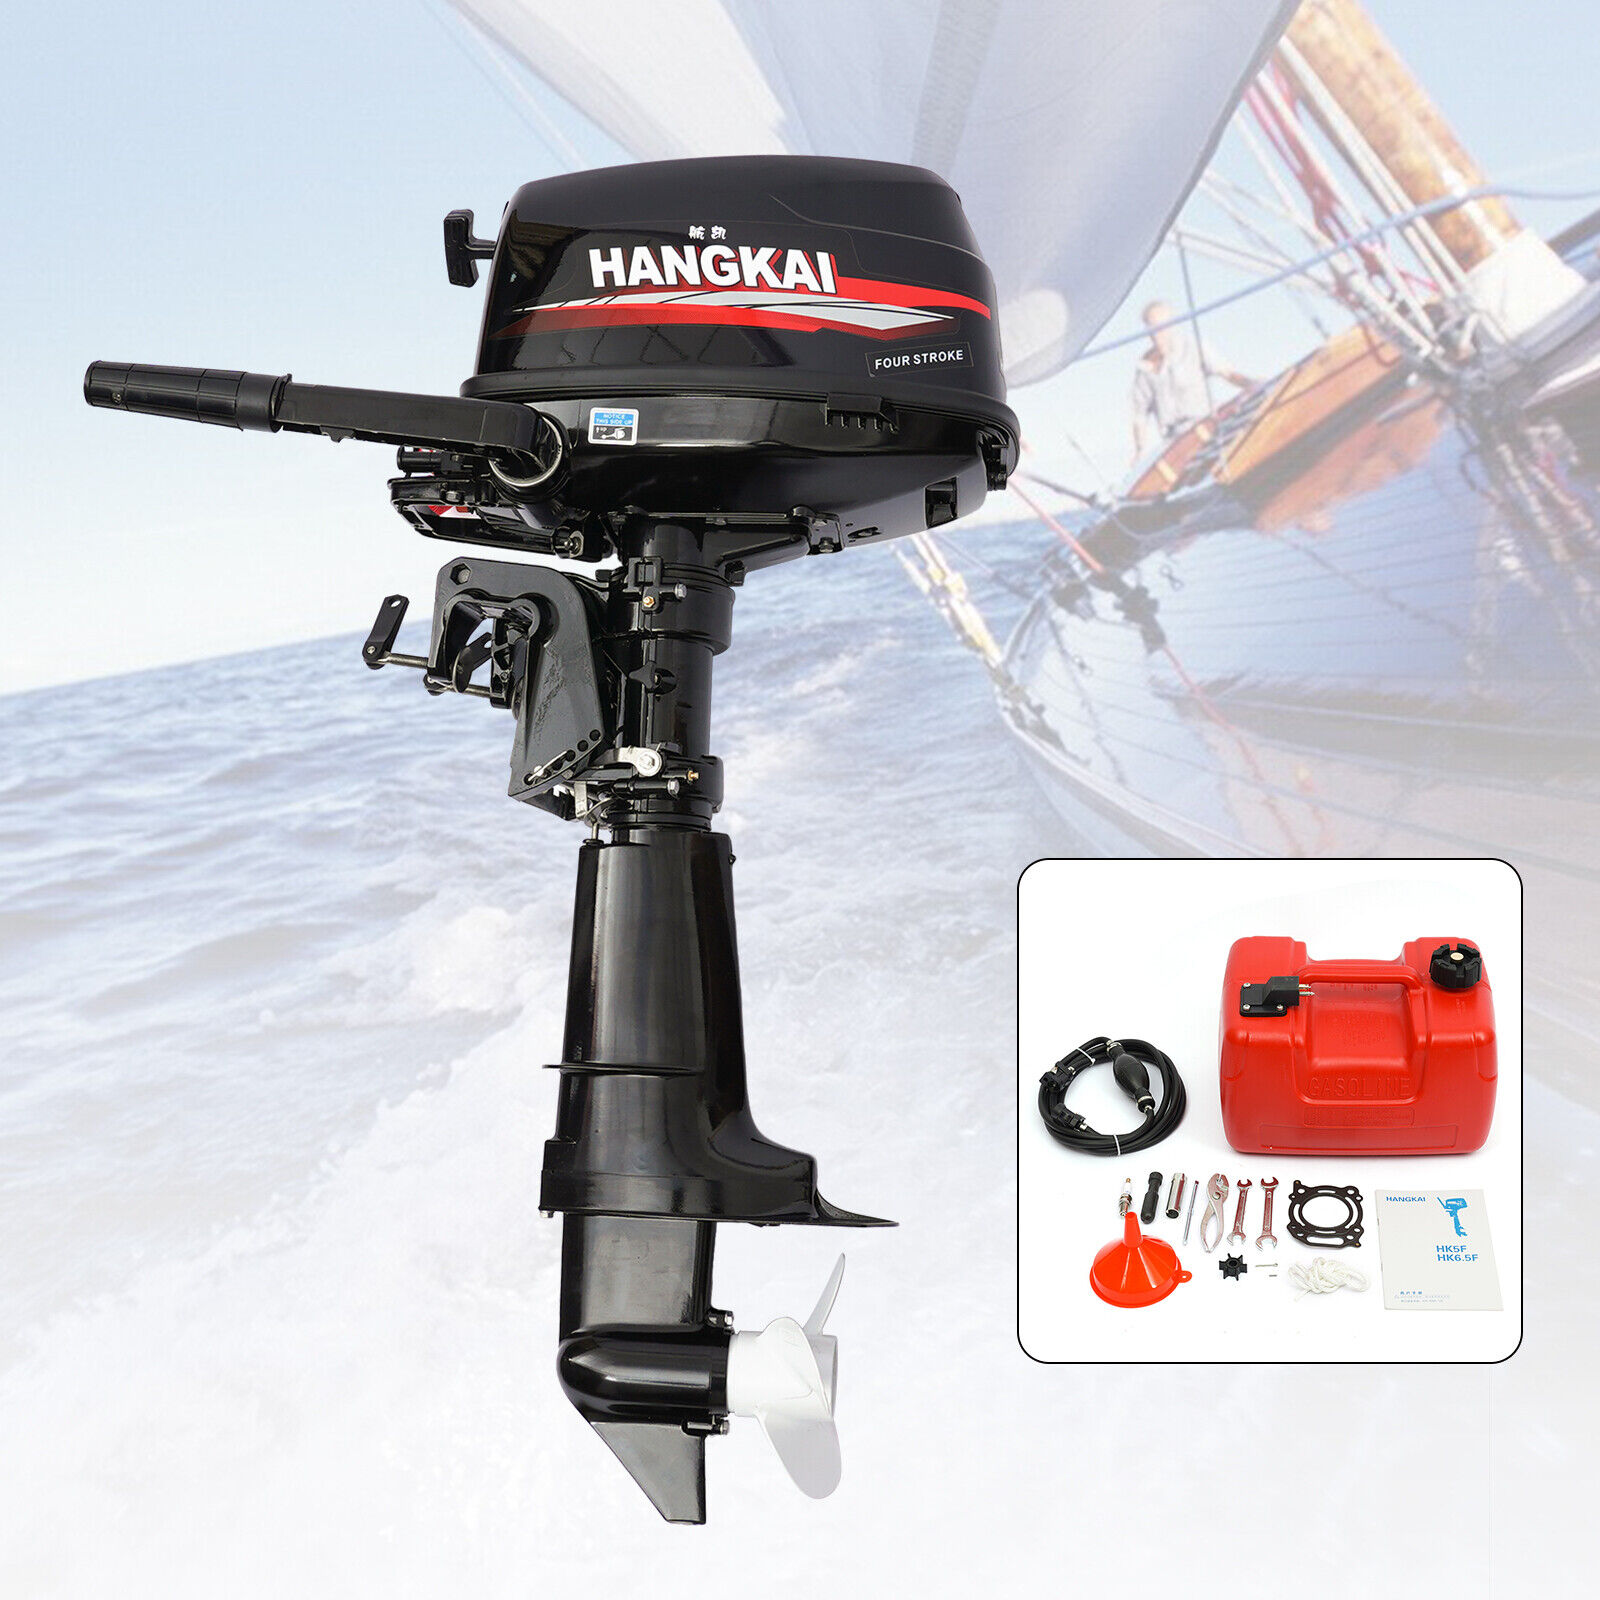 HANGKAI 6.5 HP 4 Stroke Outboard Motors Boat Engine CDI Water Cooling System